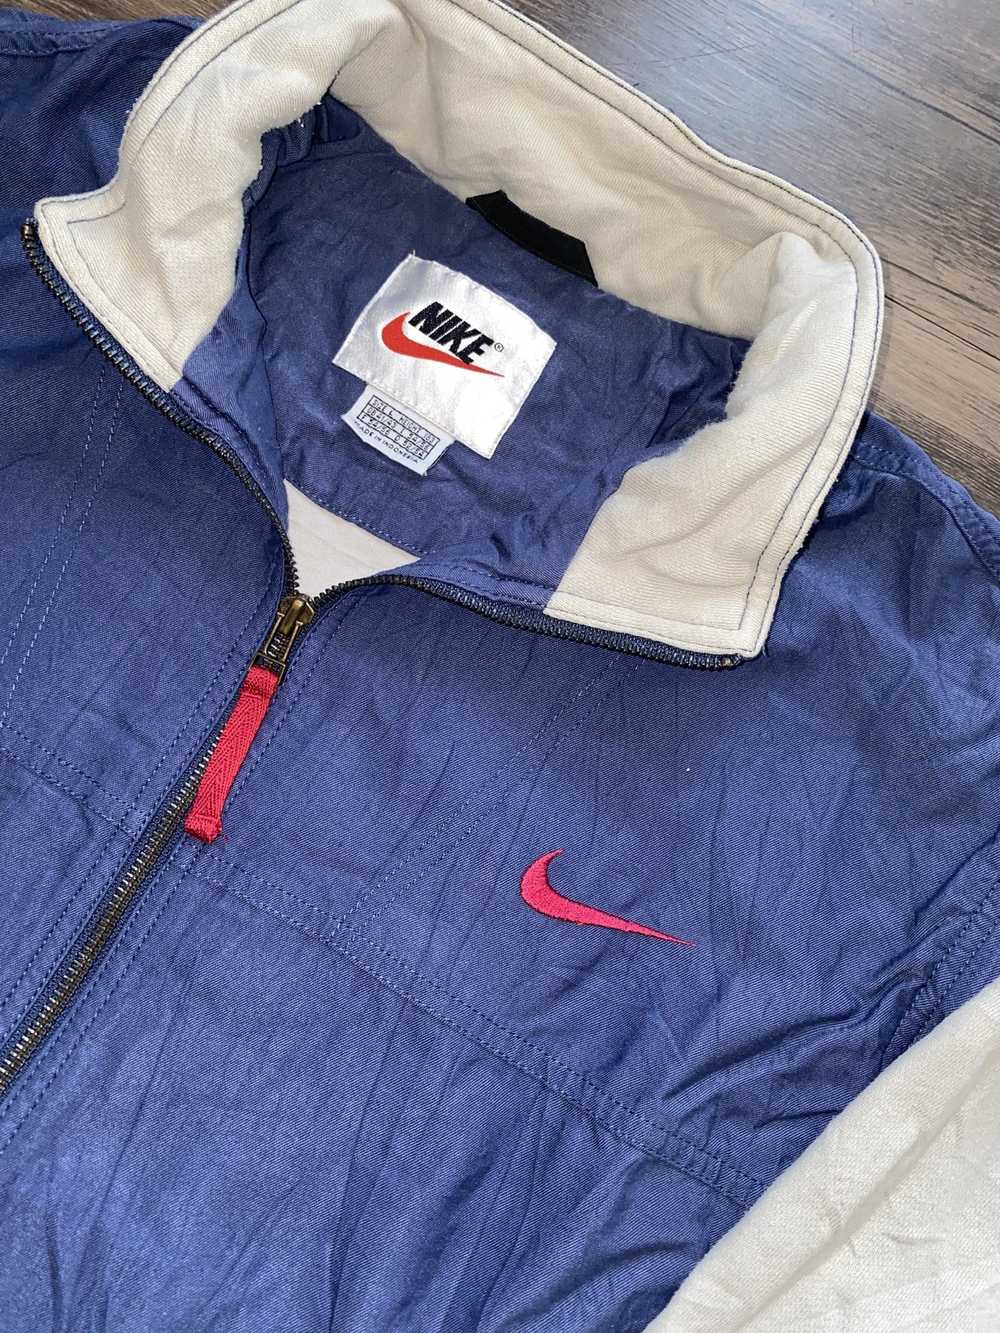 Nike Vintage 90s Nike Jacket/Vest - image 3